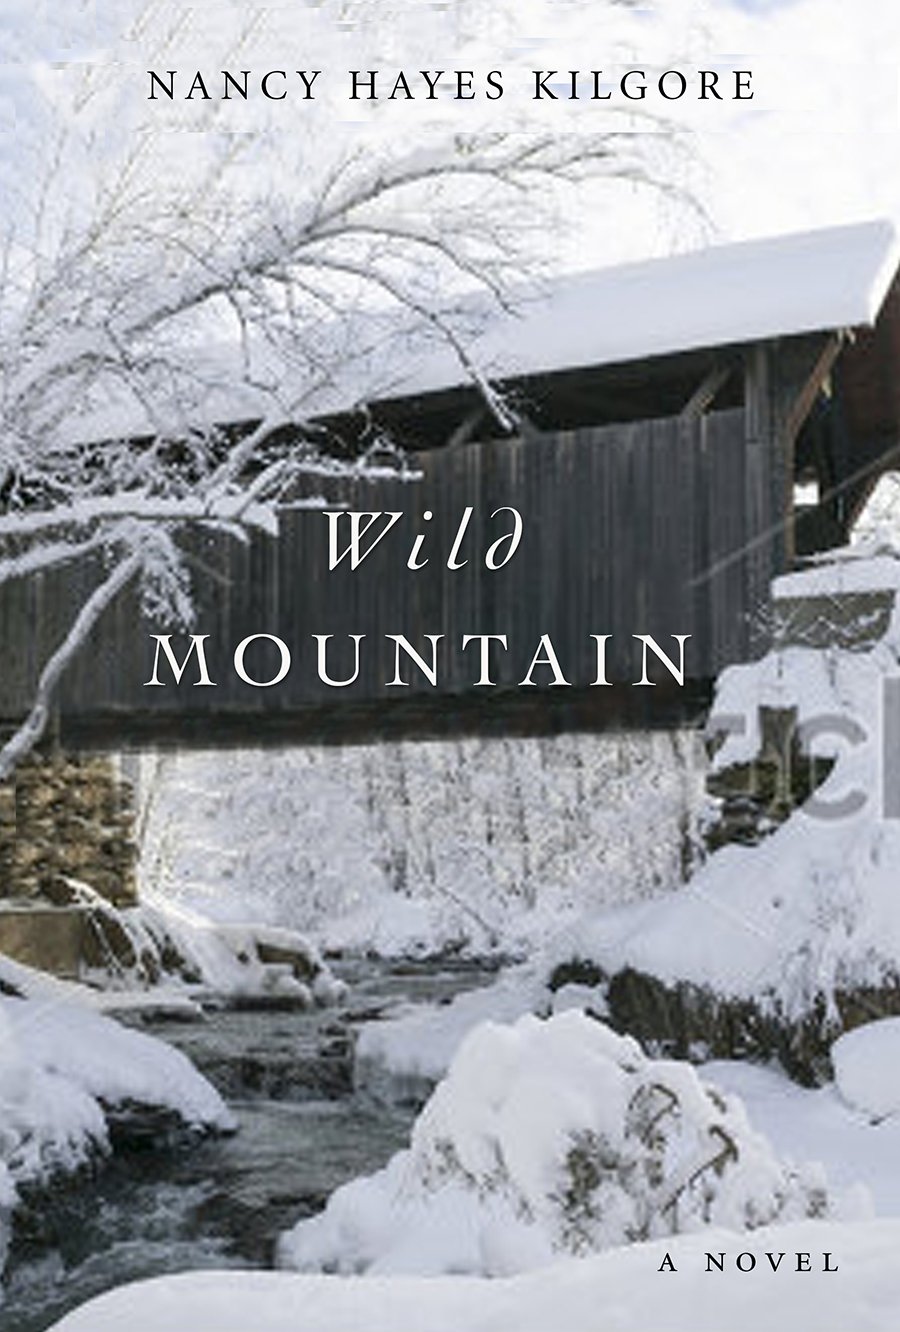 Book Review: “Wild Mountain” by Nancy Hayes Kilgore